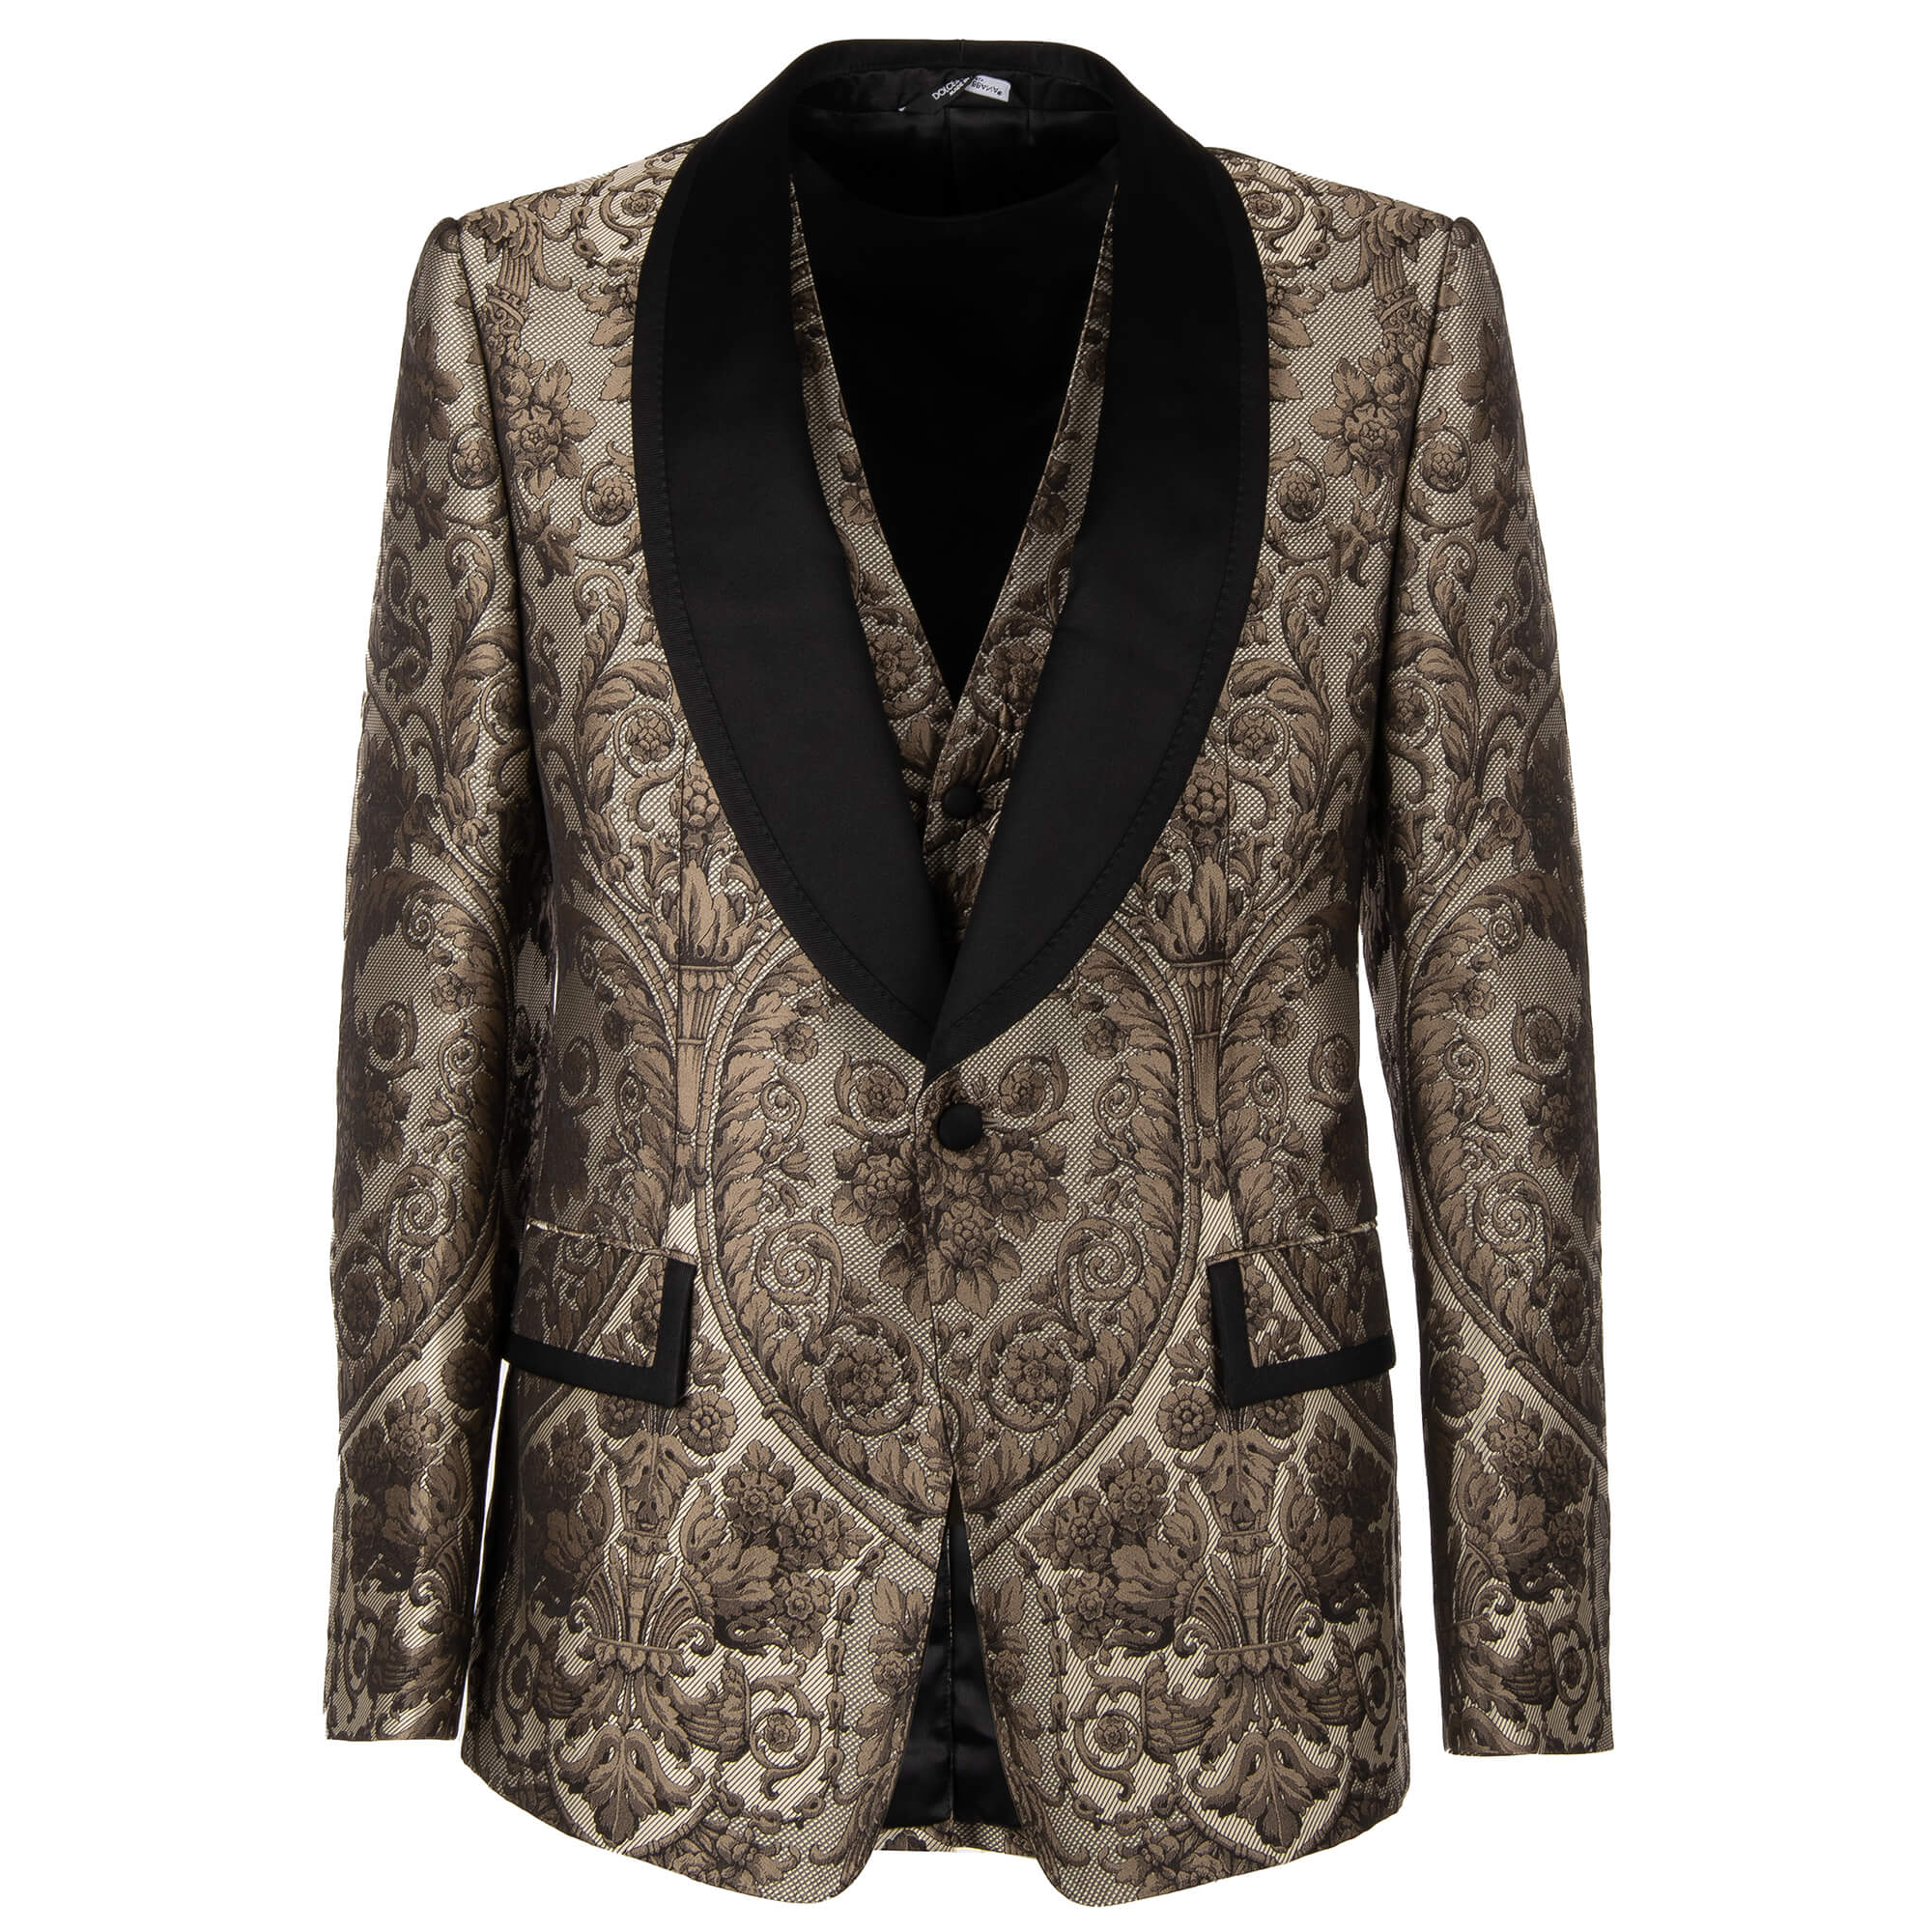 Dolce & Gabbana Baroque Jacquard Blazer with Waistcoat Black Beige 50 US 40  M L | FASHION ROOMS